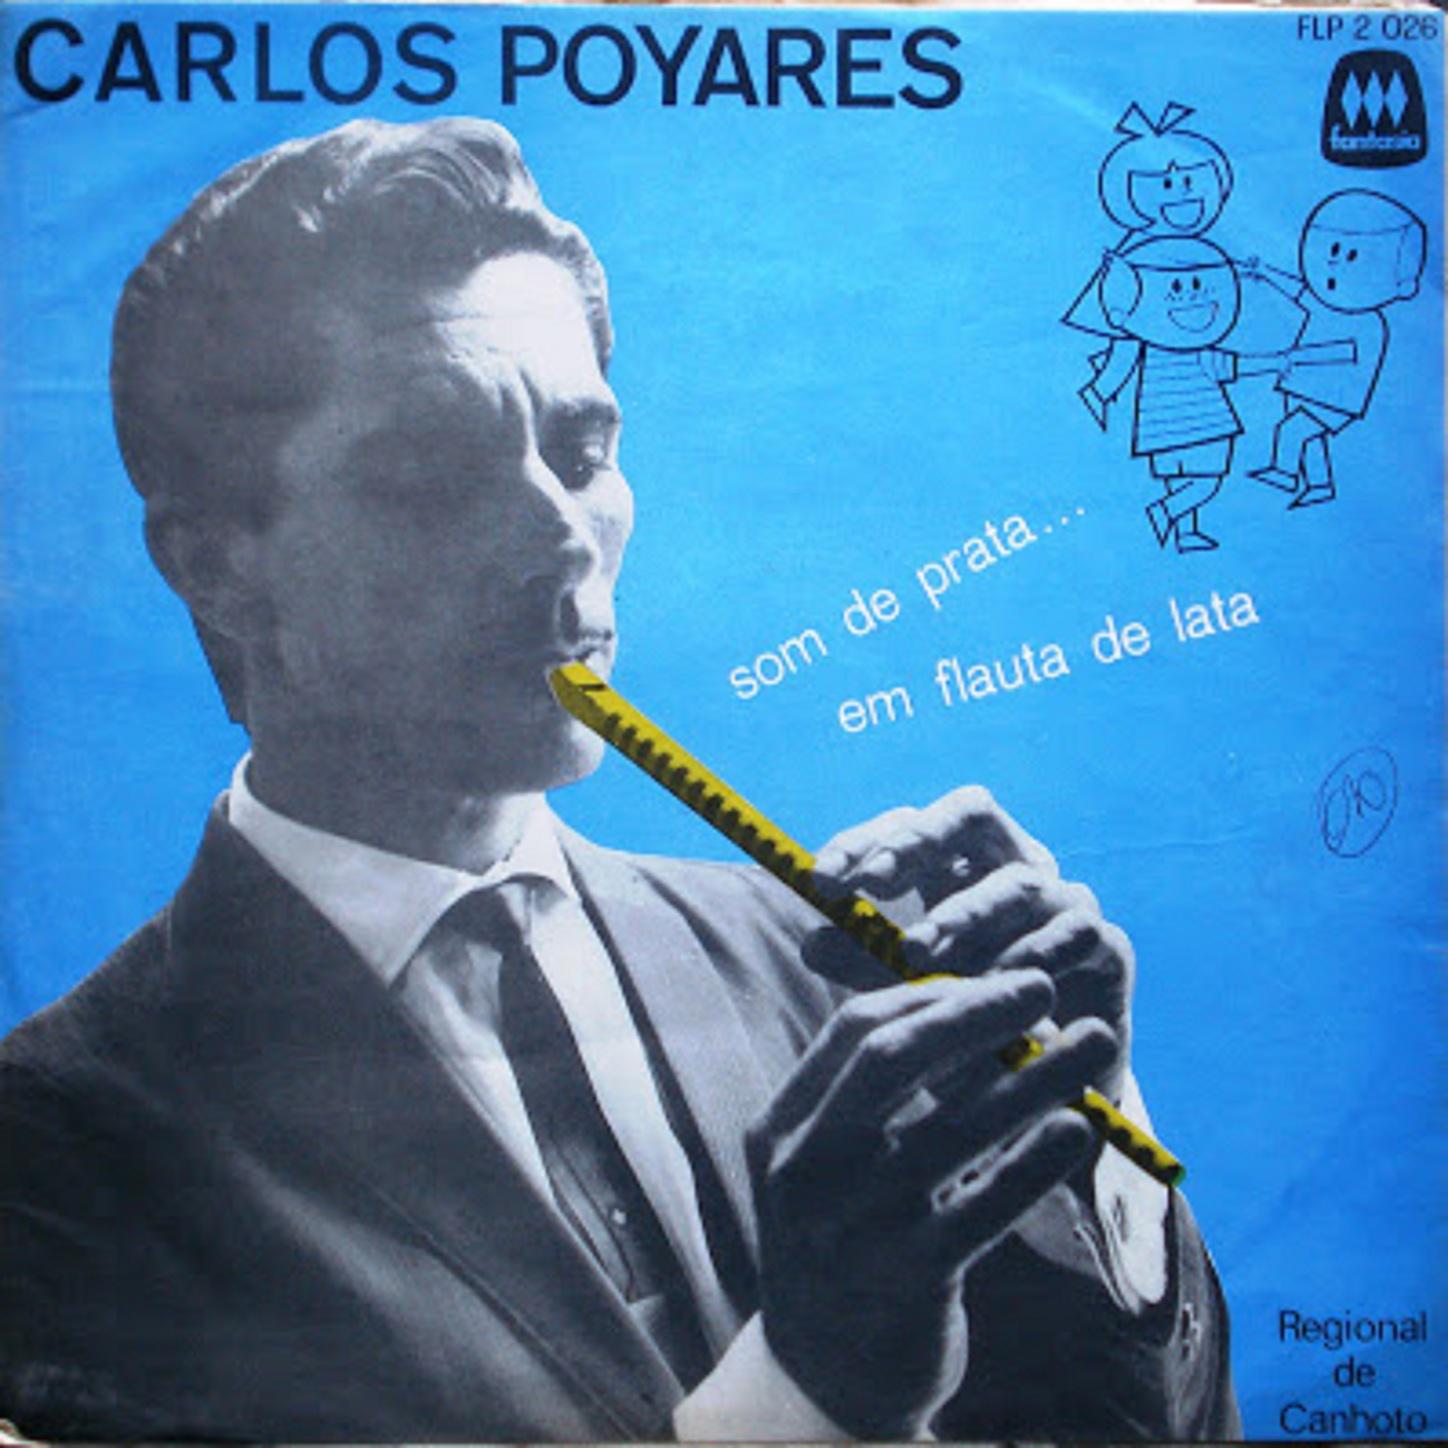 Carlos Poyares - Rato, rato, rato